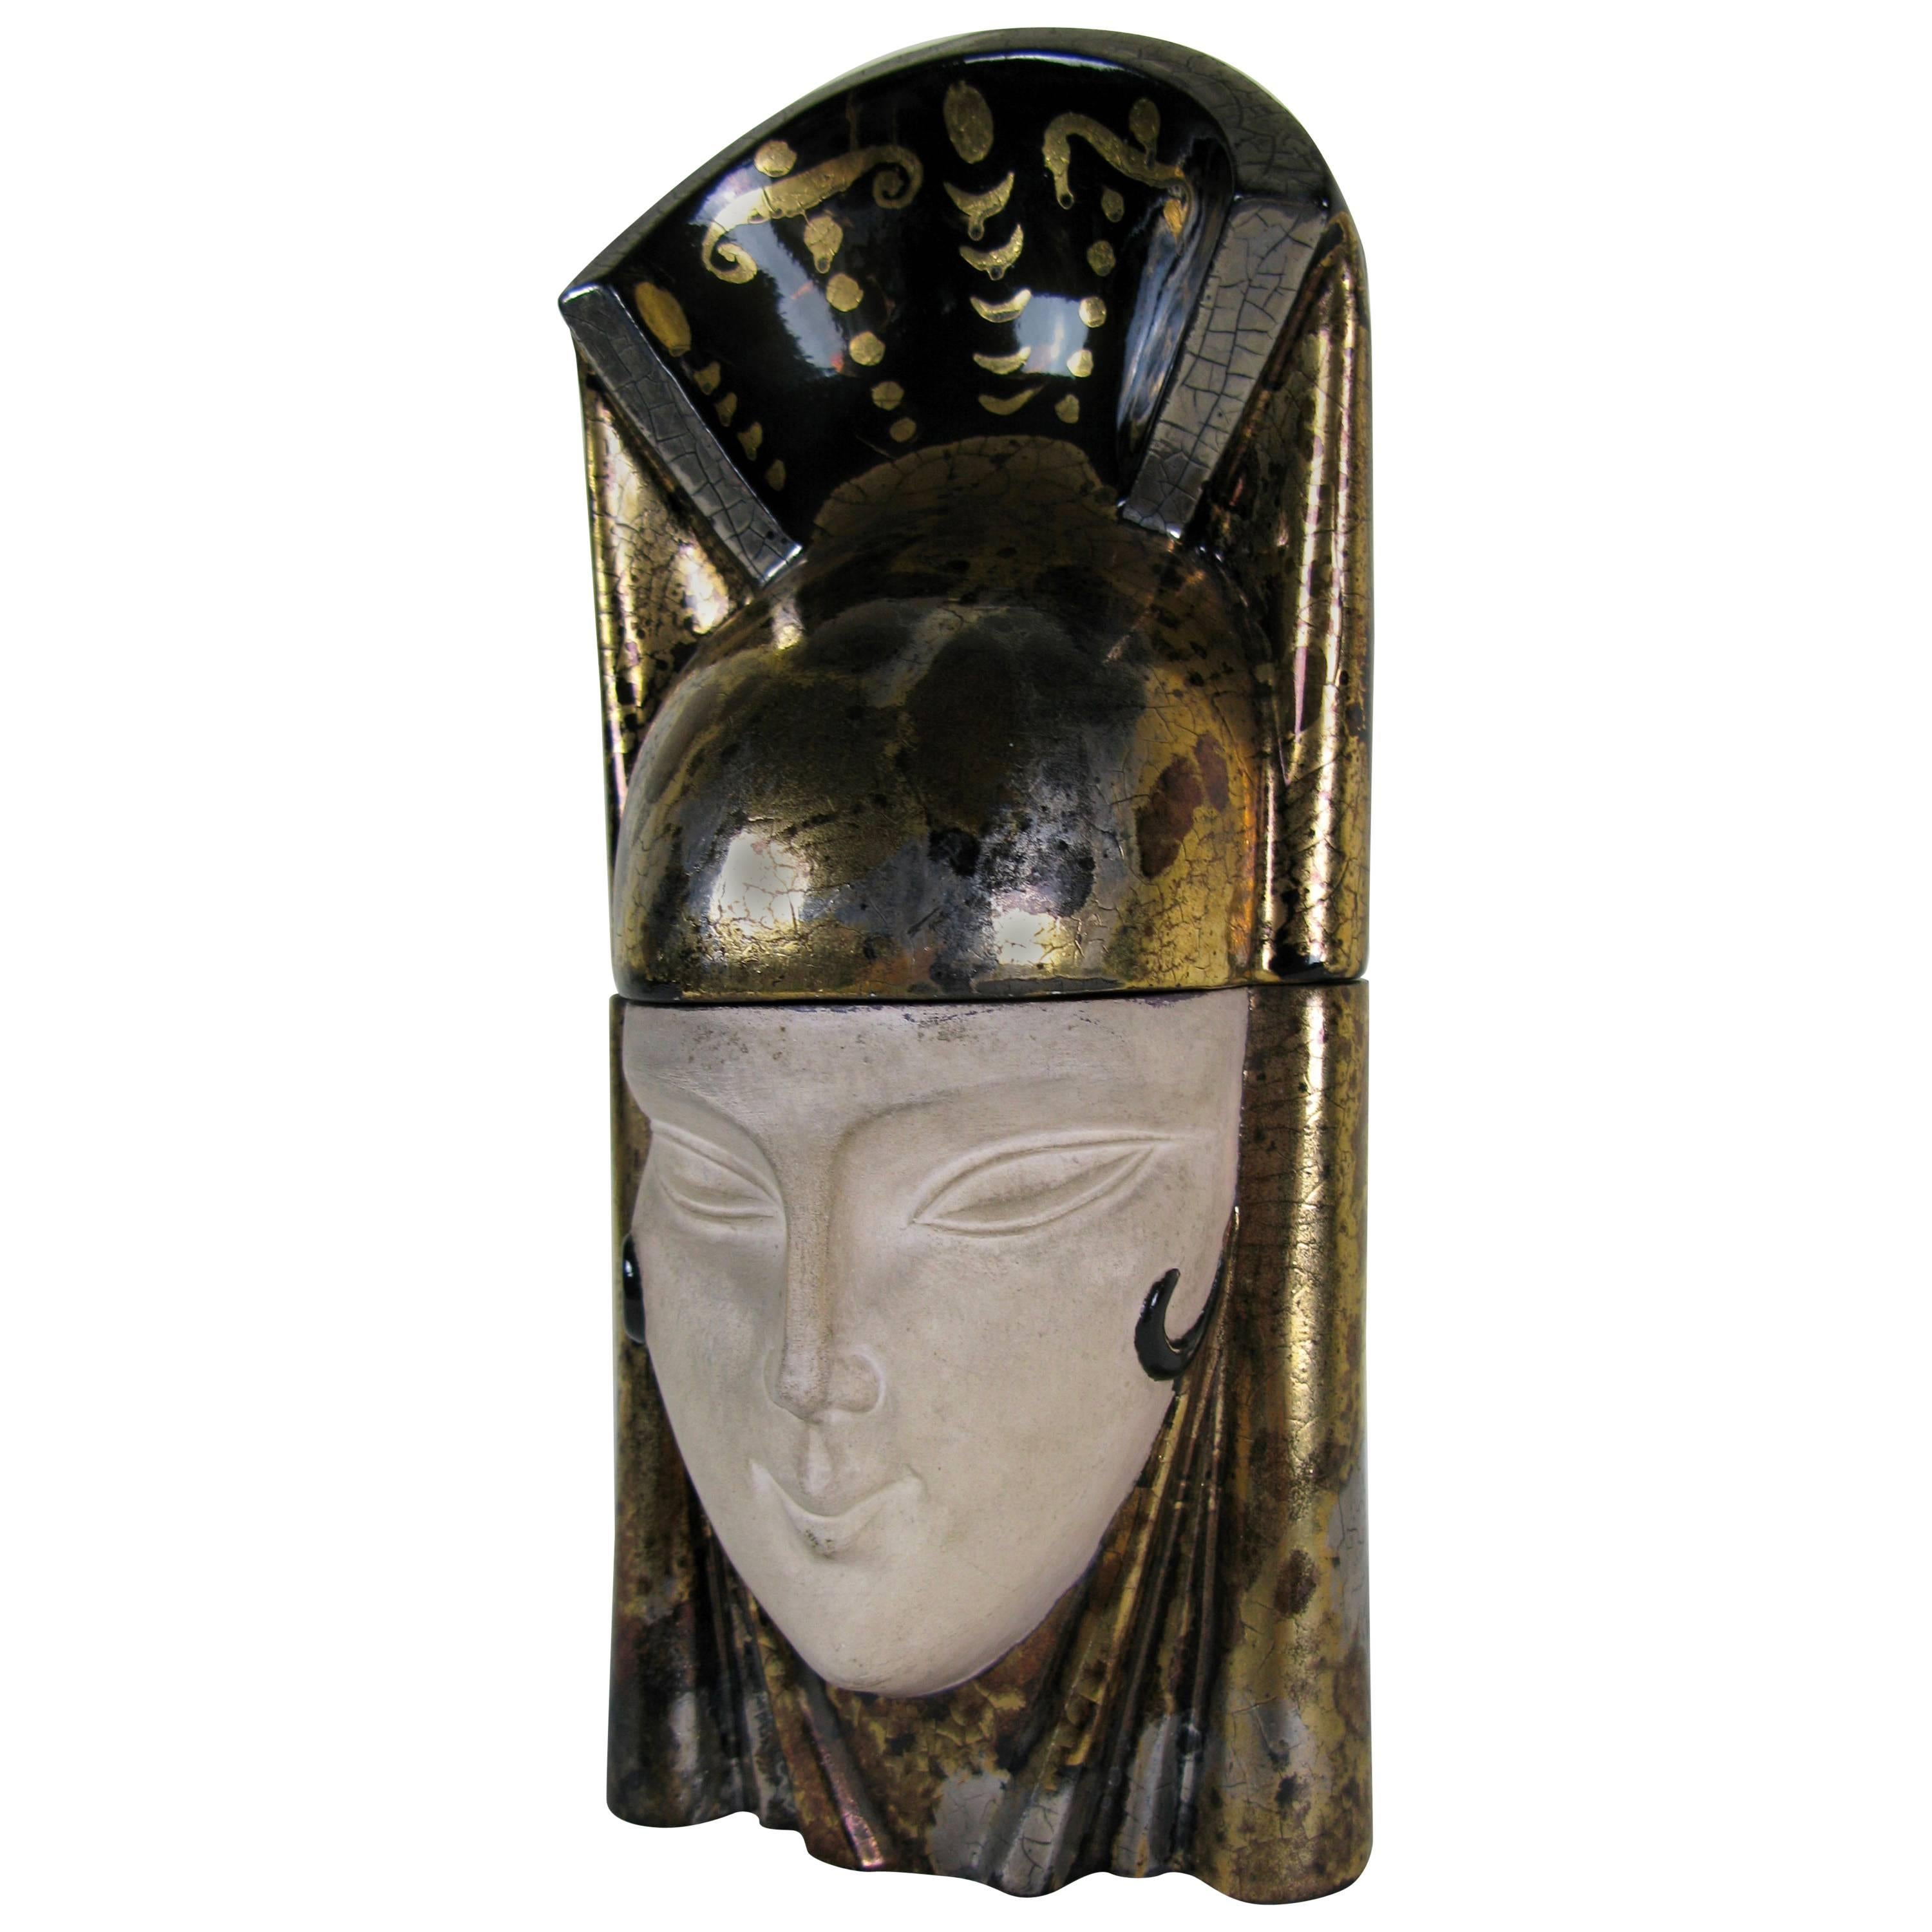 Egyptian Art Deco Head Candy Box by ROBJ